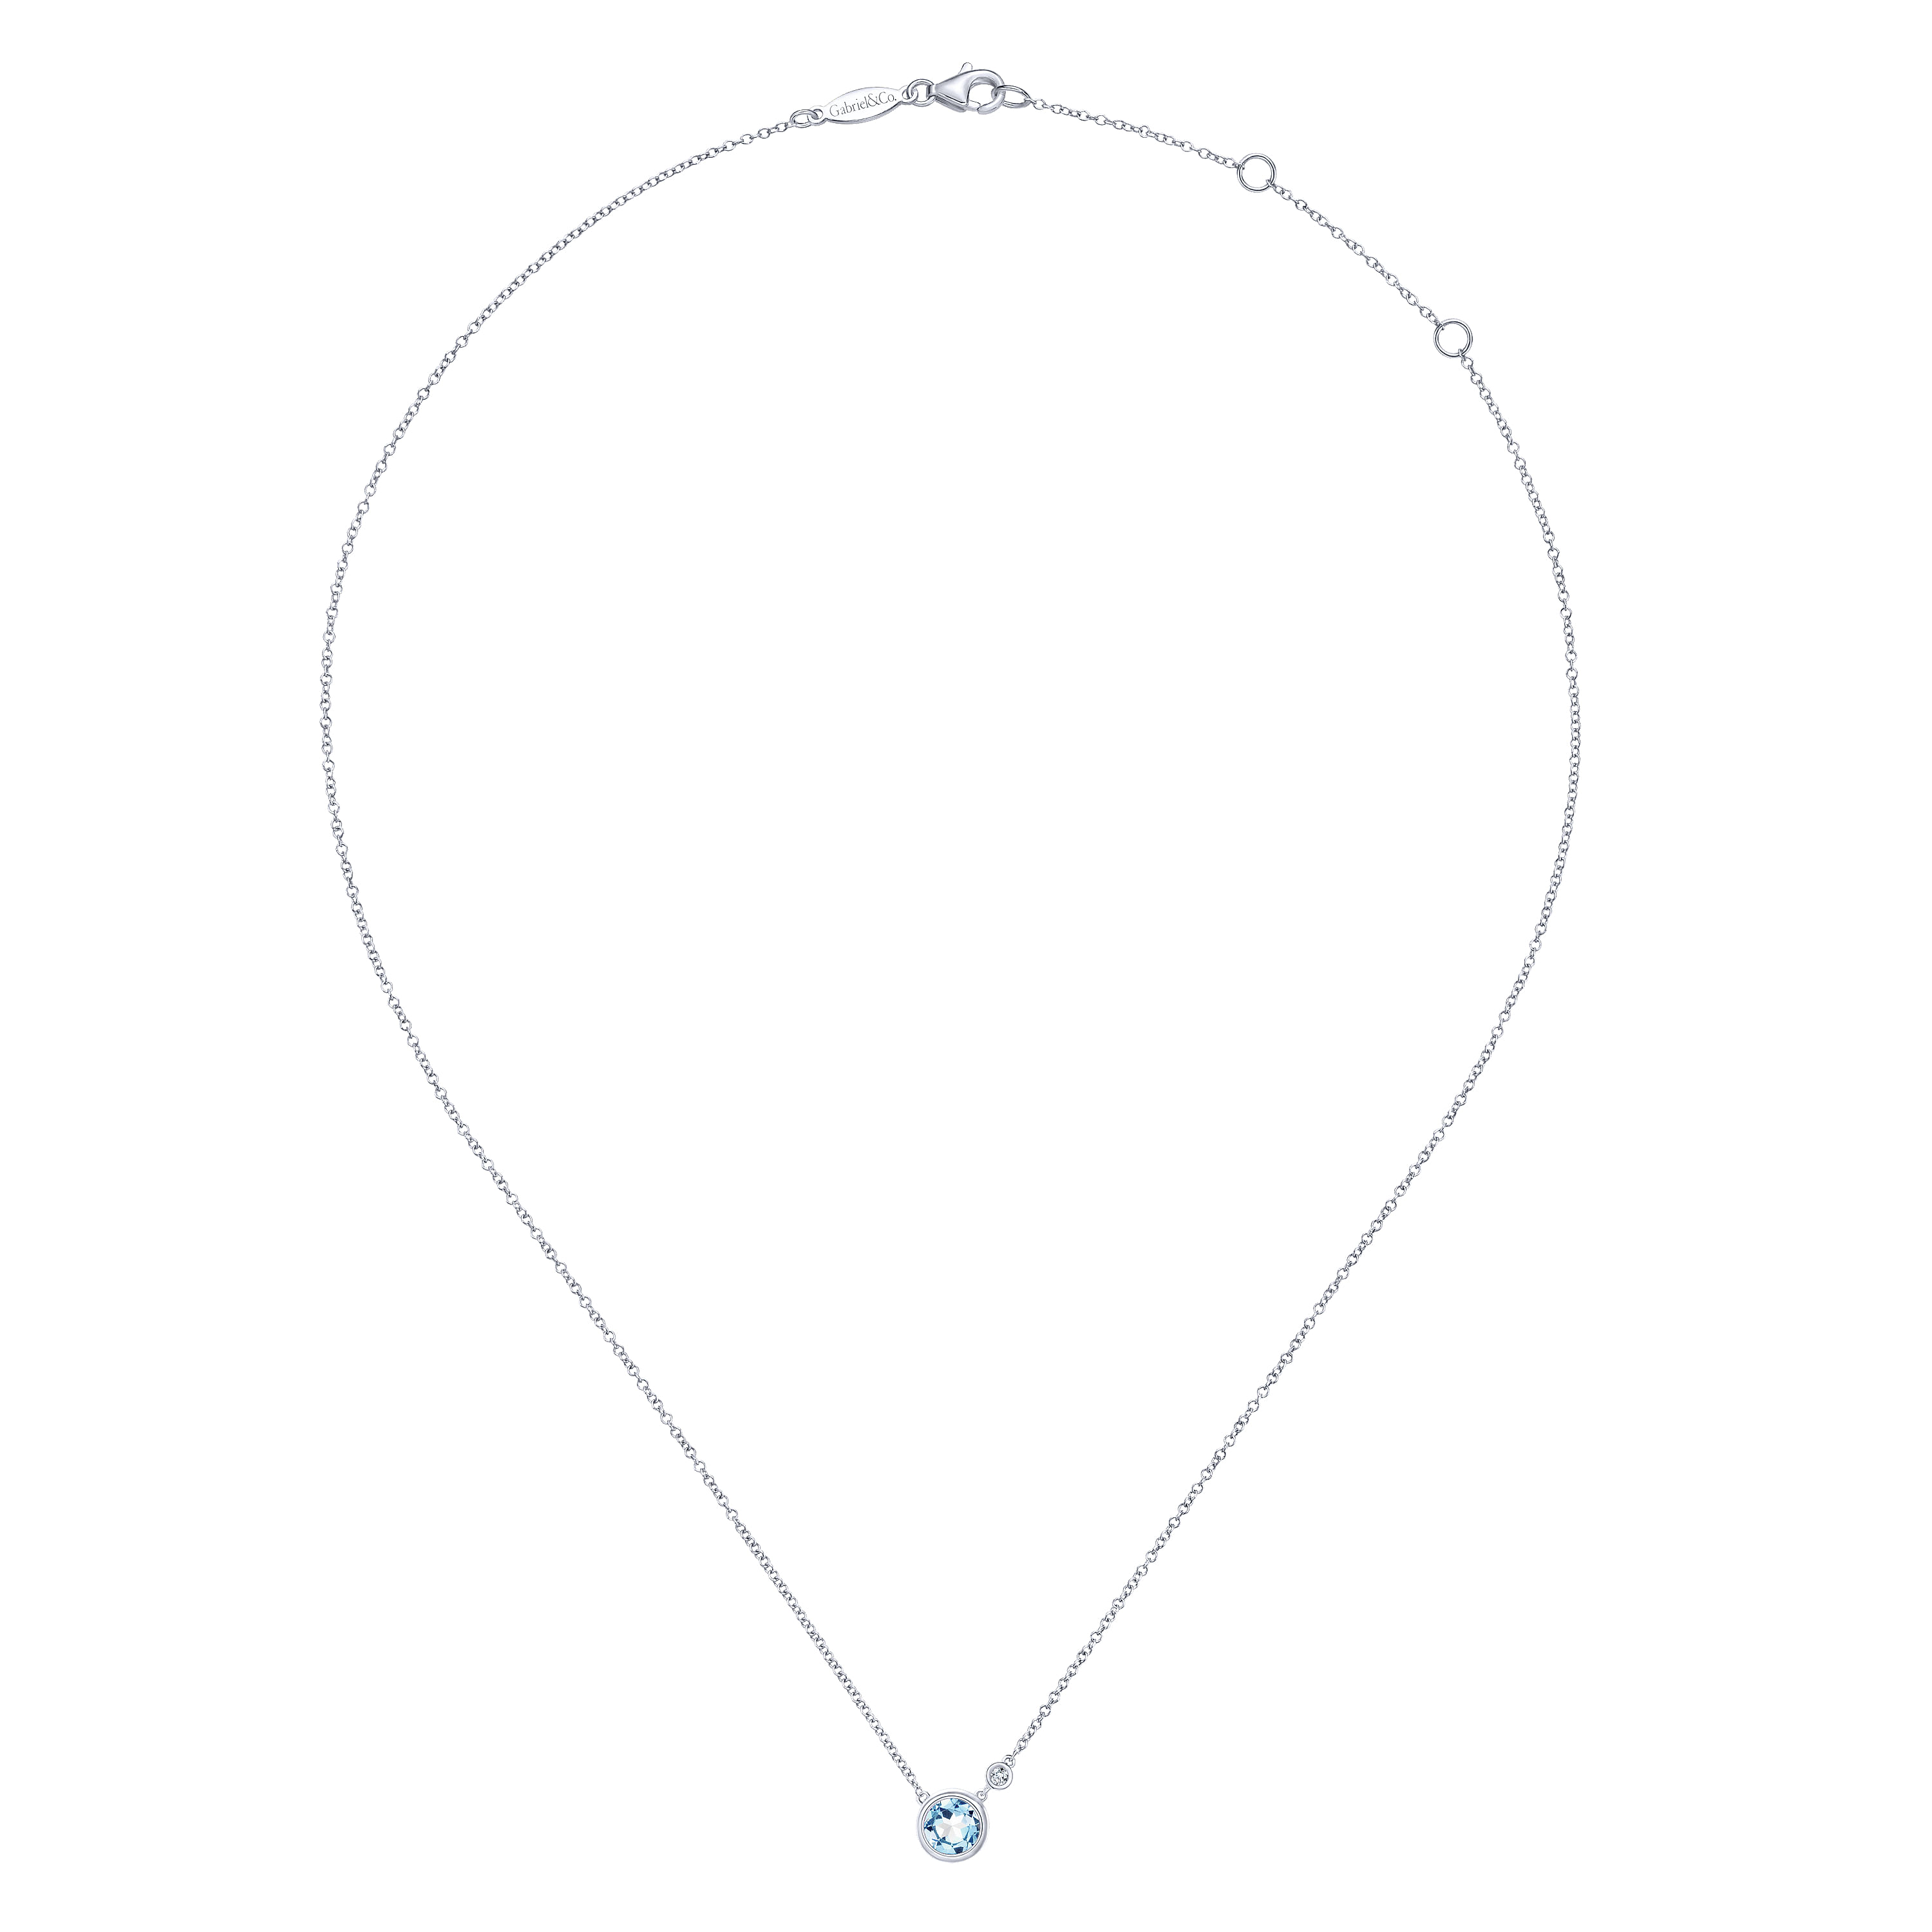 925 Sterling Silver Round Bezel Set Aquamarine and Diamond Pendant Necklace